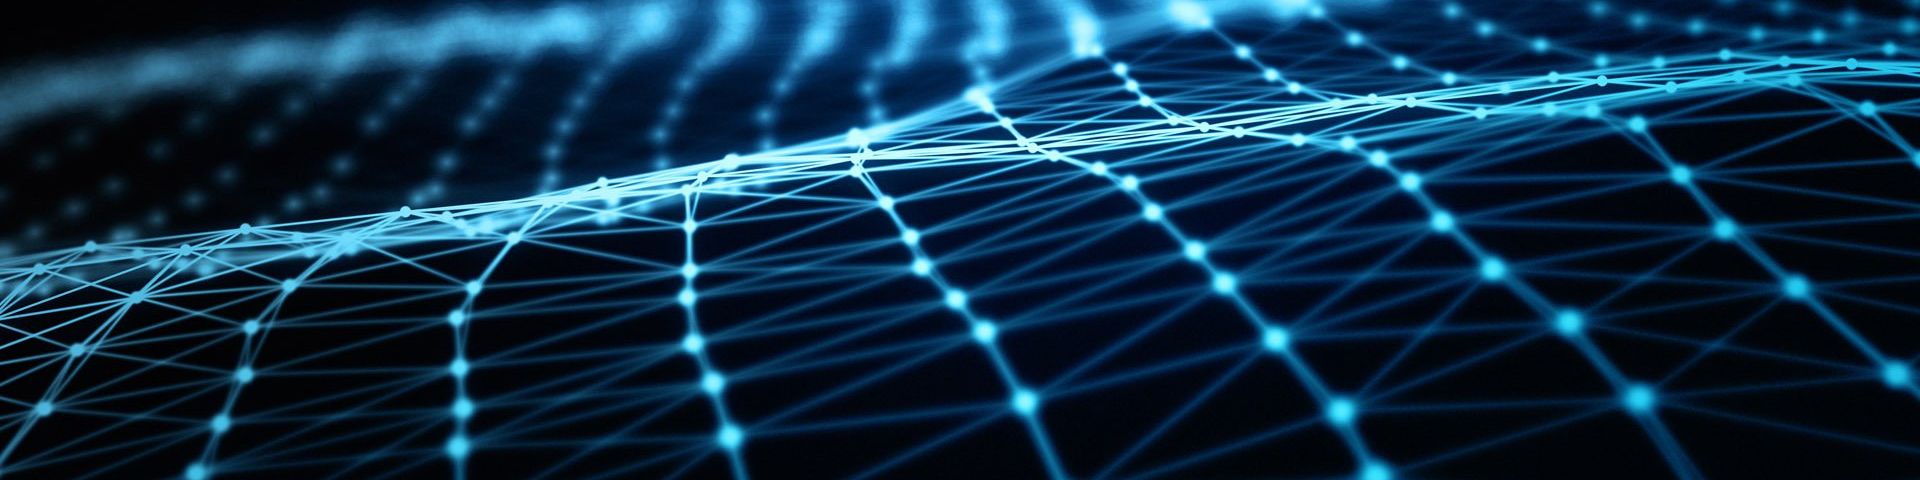 A futuristic mesh of blue triangles against a black background.